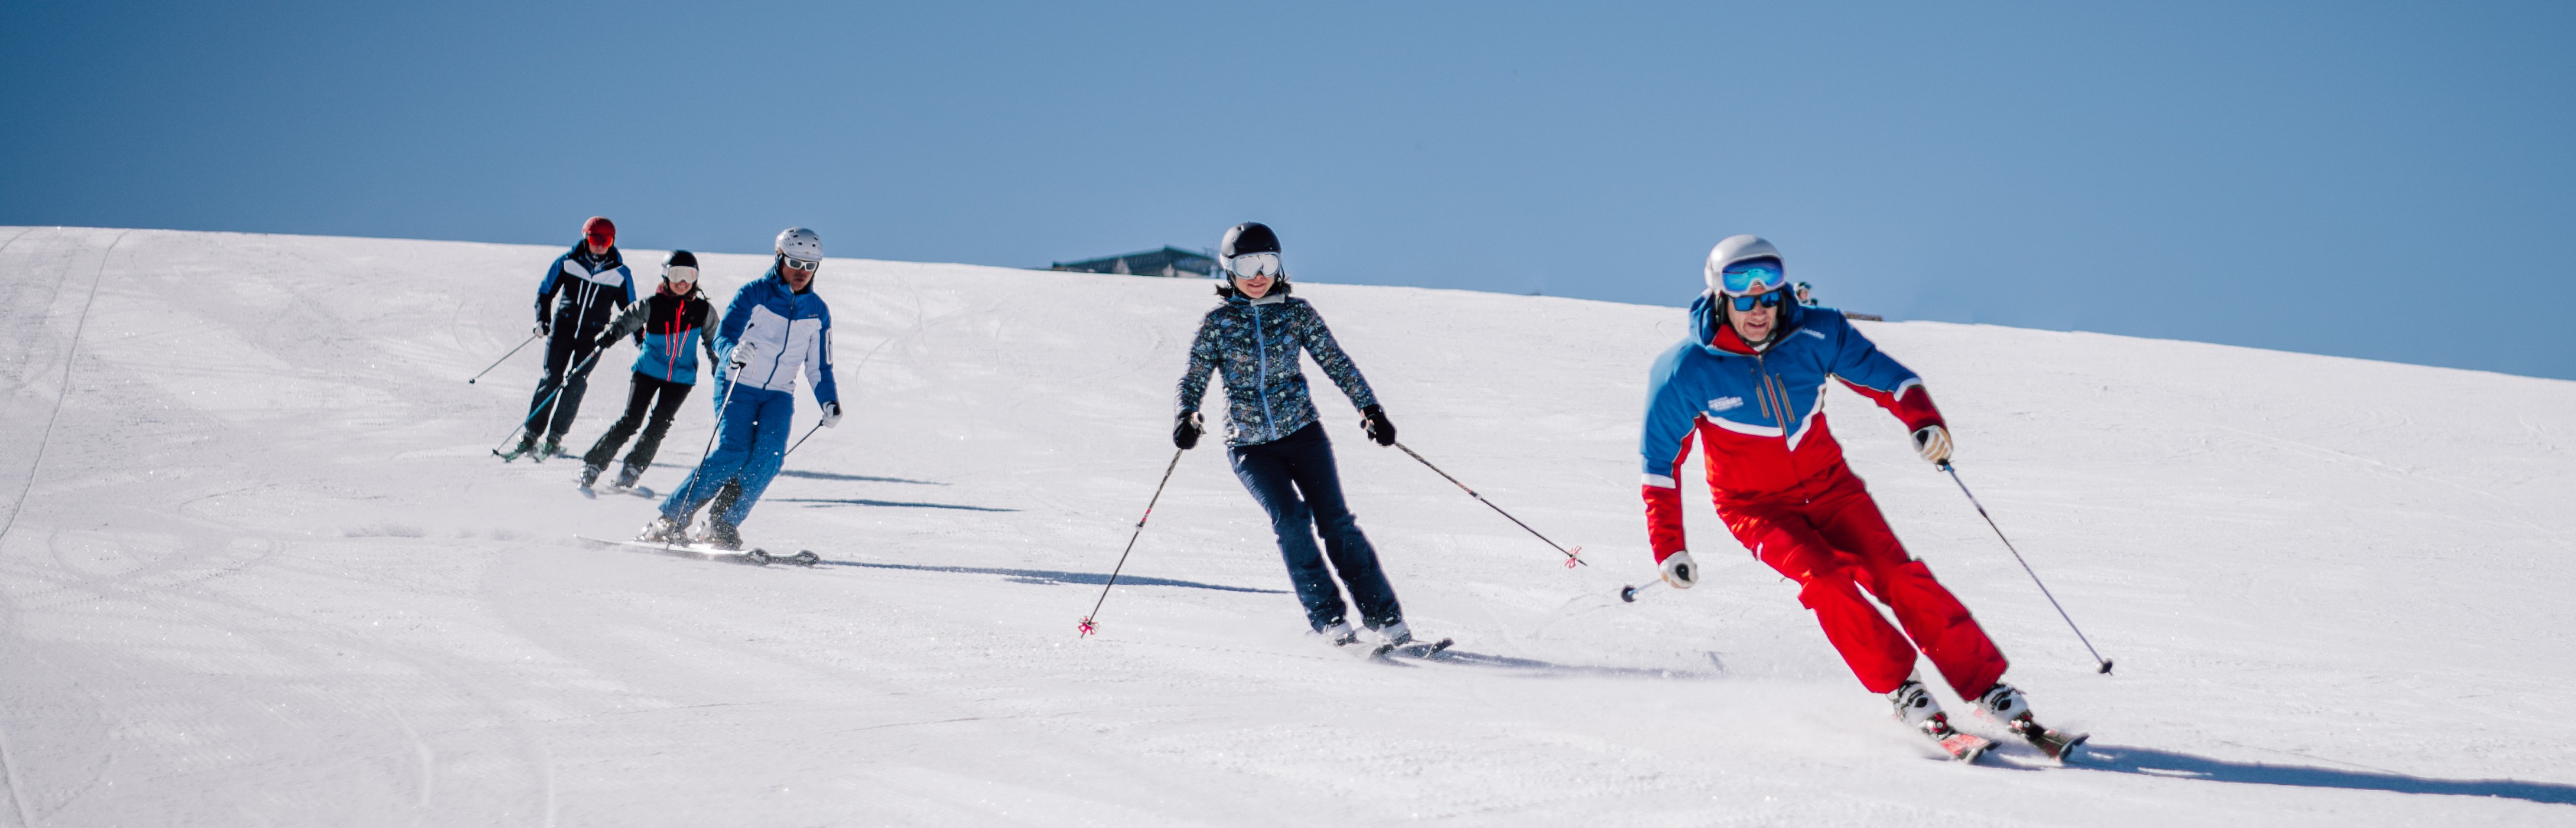 Skischule Lofer Erwachsenenkurs 1